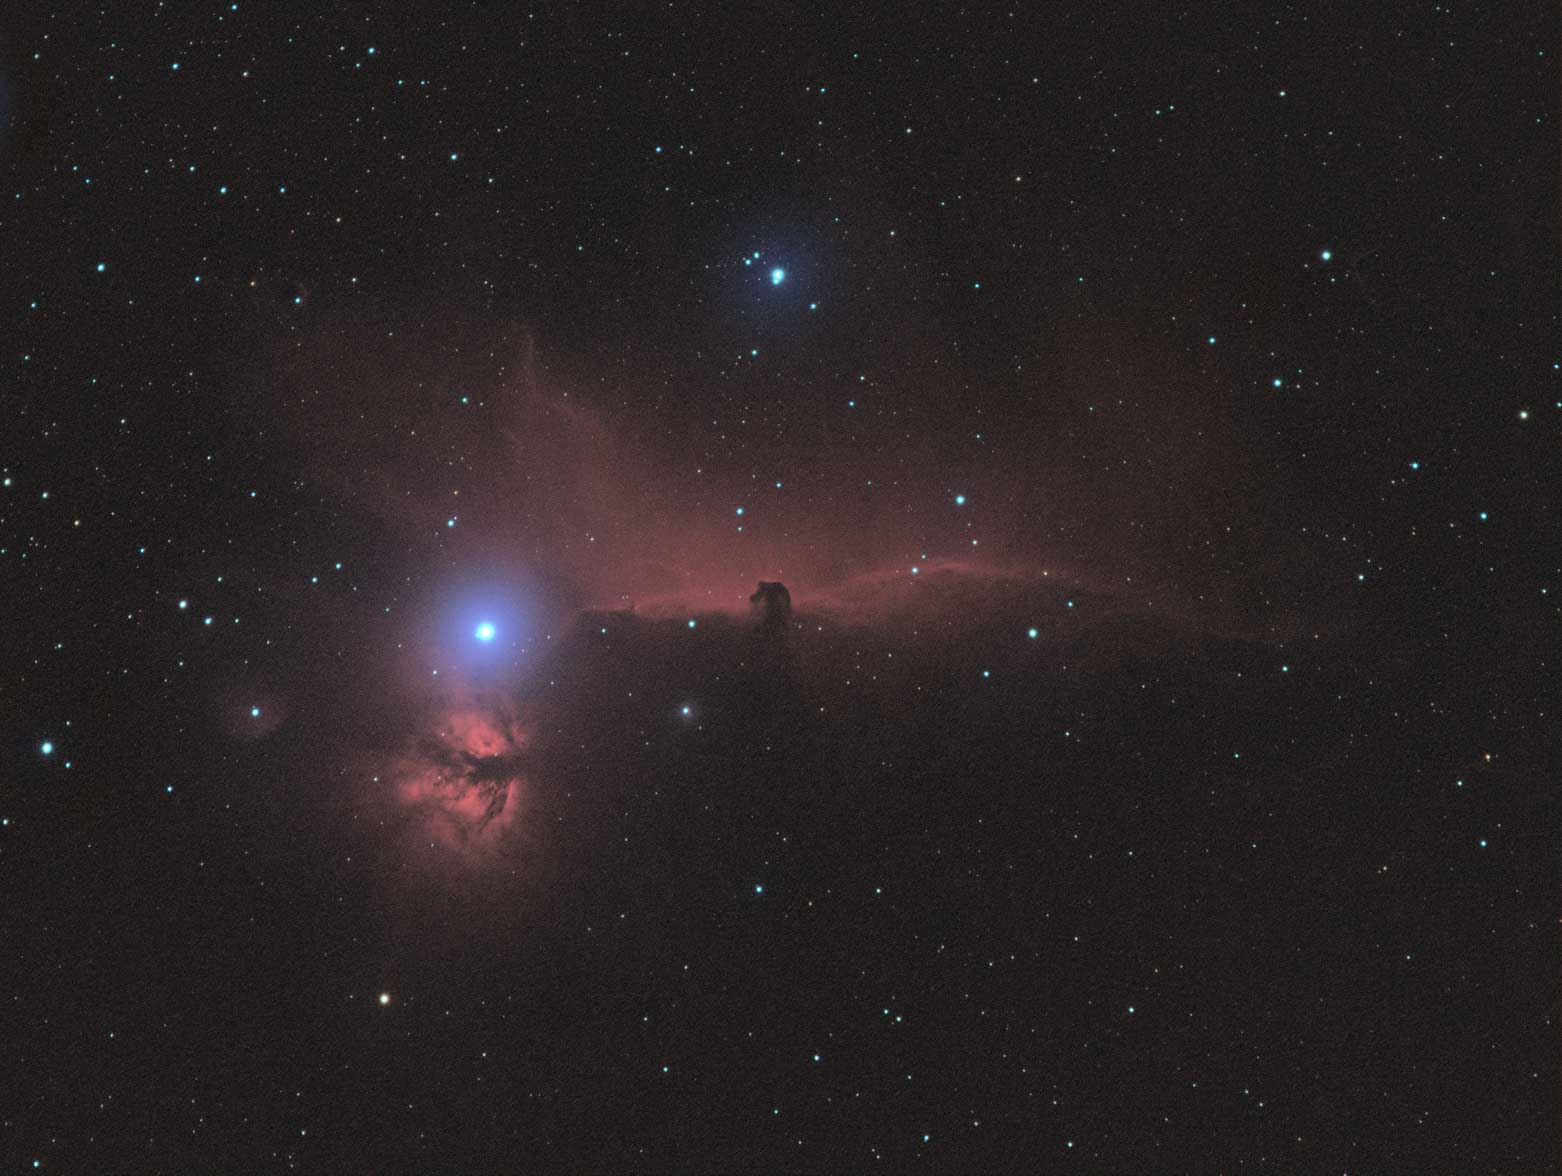 20200321-20200322 Barnard 33, or Horsehead Nebula